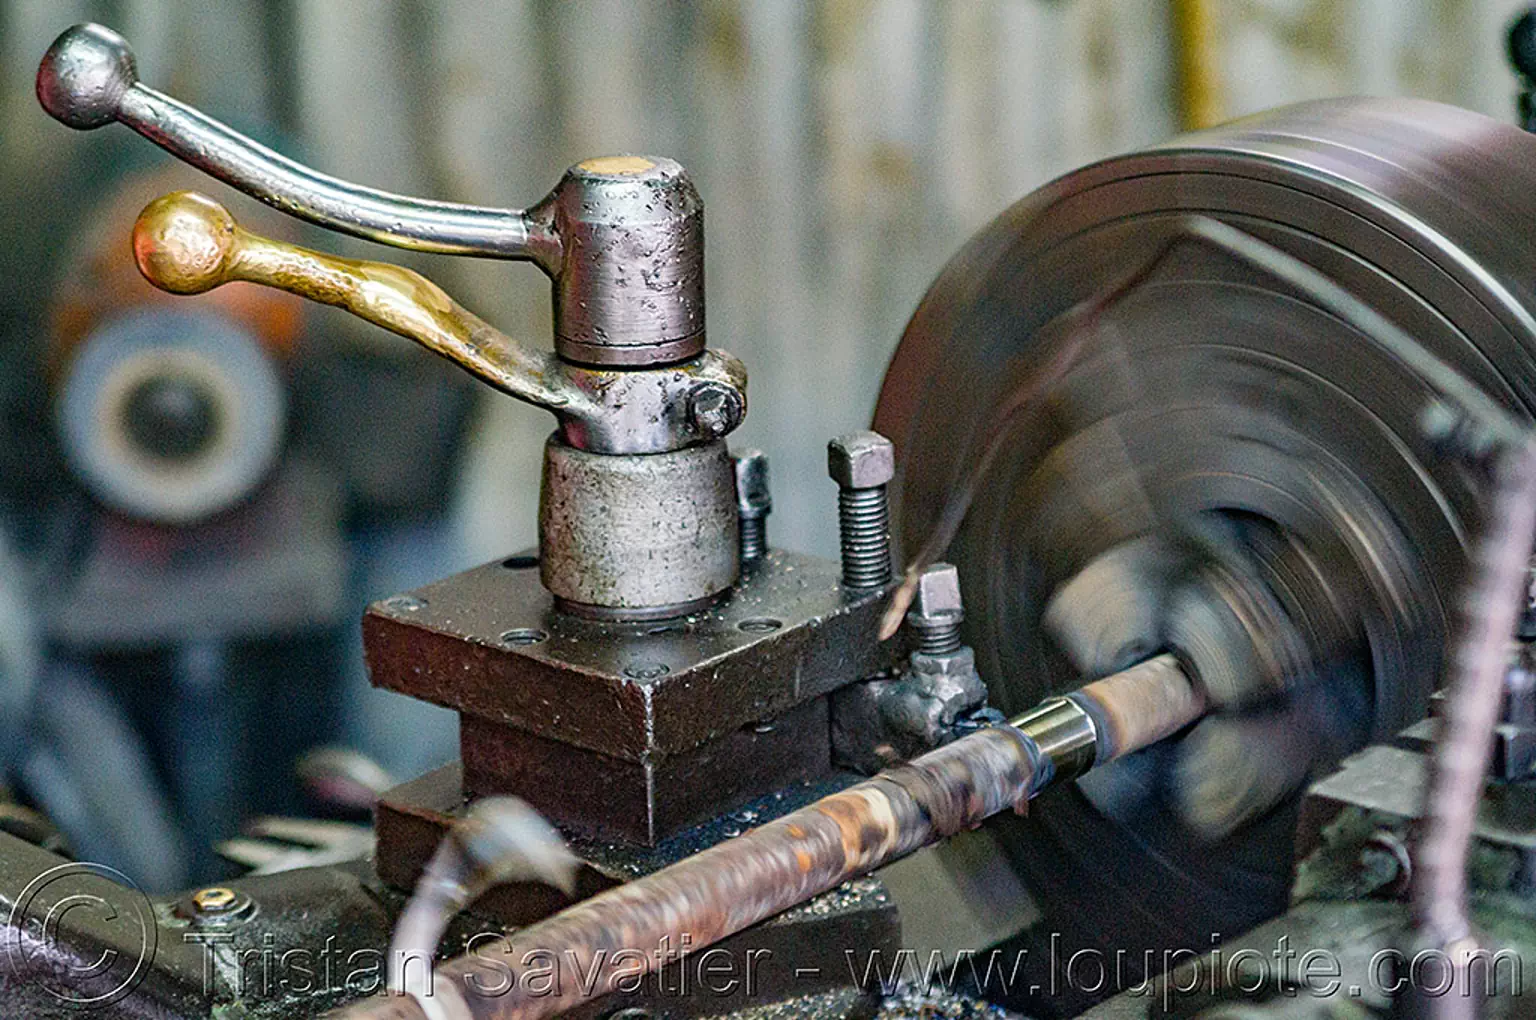 lathe machine tool (philippines), baguio, machine shop, machine tool, mechanical workshop, metal lathe, operator, philippines, worker, working